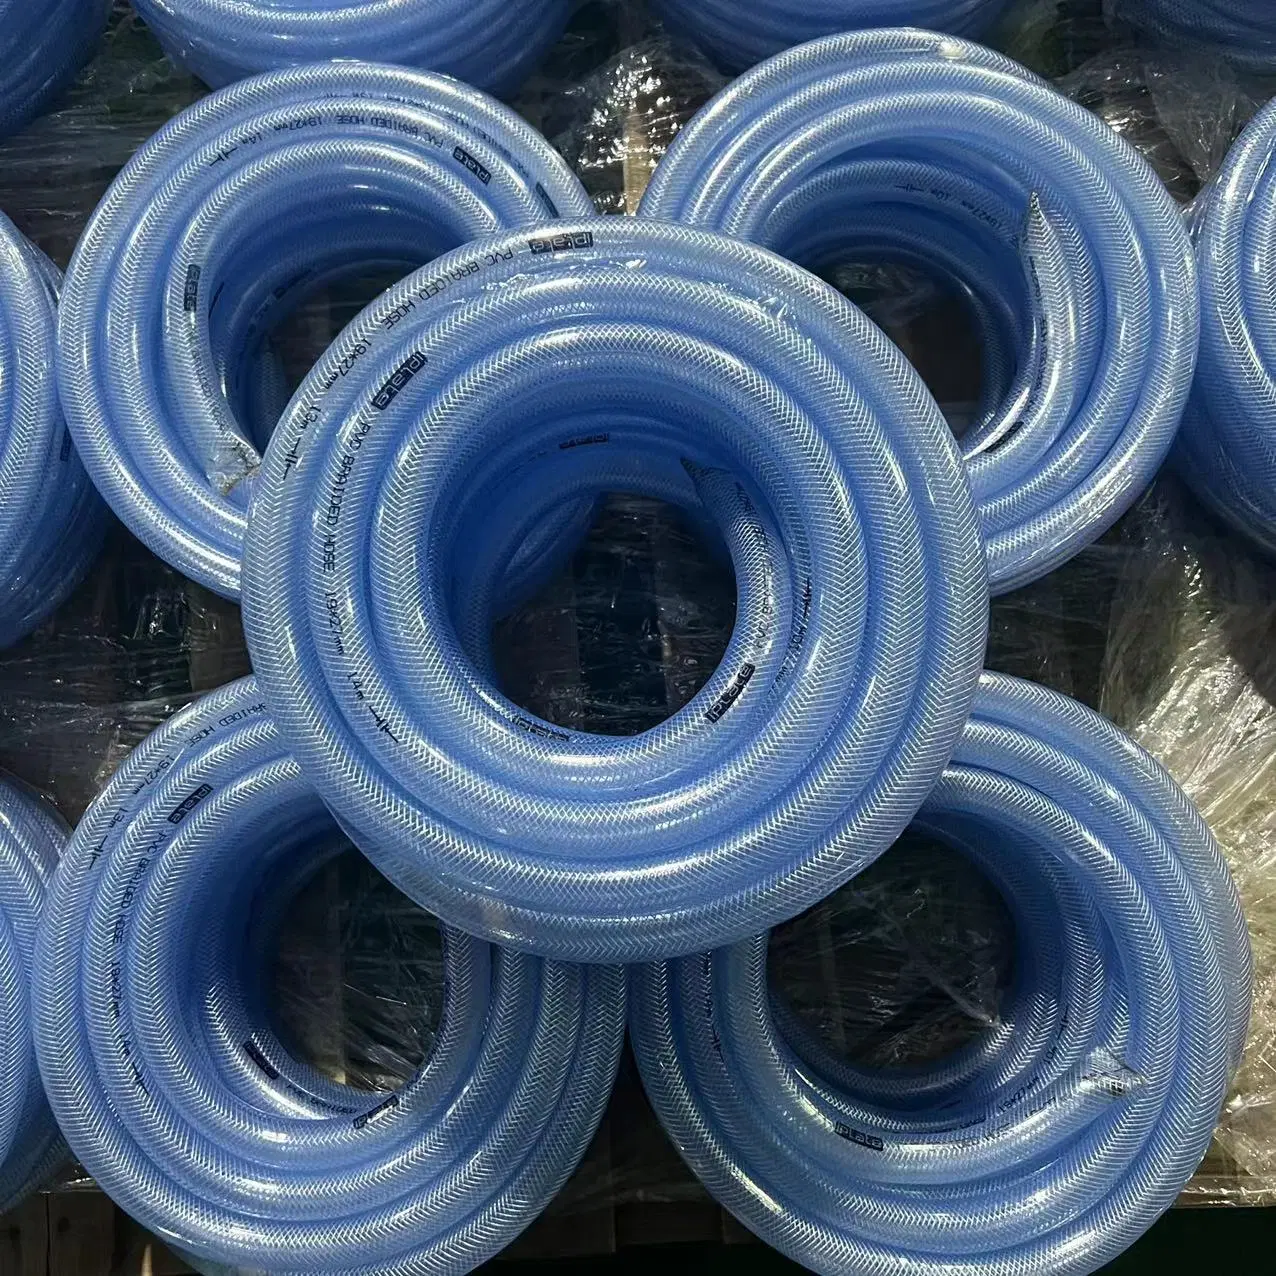 20mm (3/4") transparenter PVC-Weichkunststoff-Schlauch Lebensmittelqualität hohe Qualität Wasserpfeife Garten Bewässerung Pflanze Bewässerungsrohr